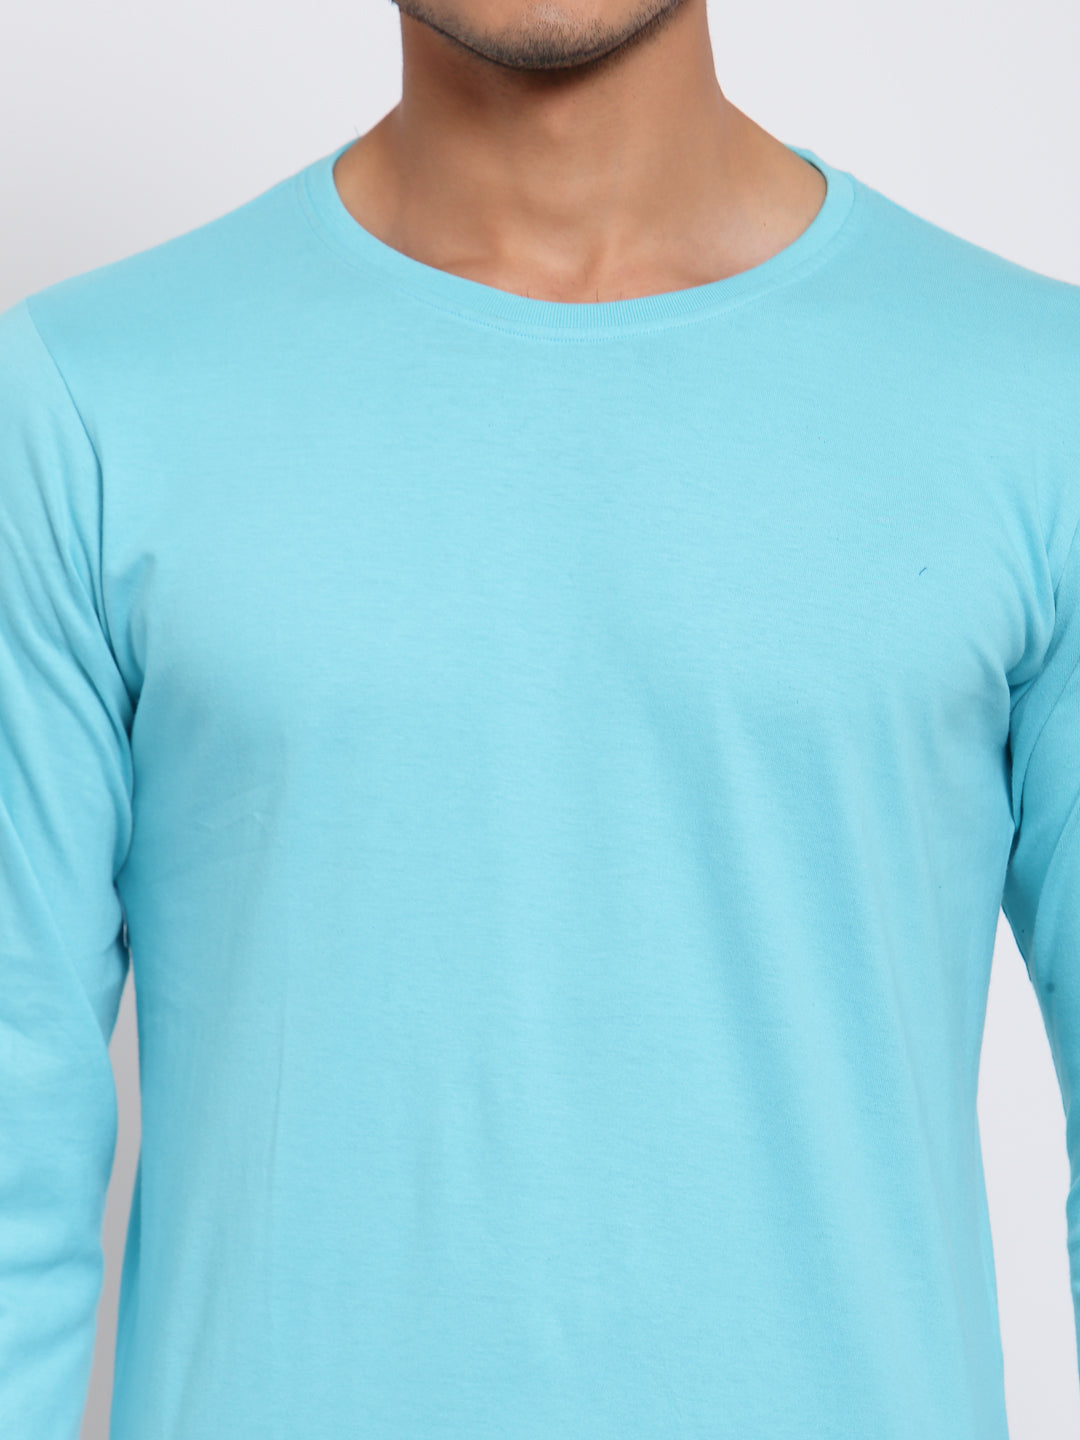 Plain Aqua Blue Full Sleeves T-Shirt